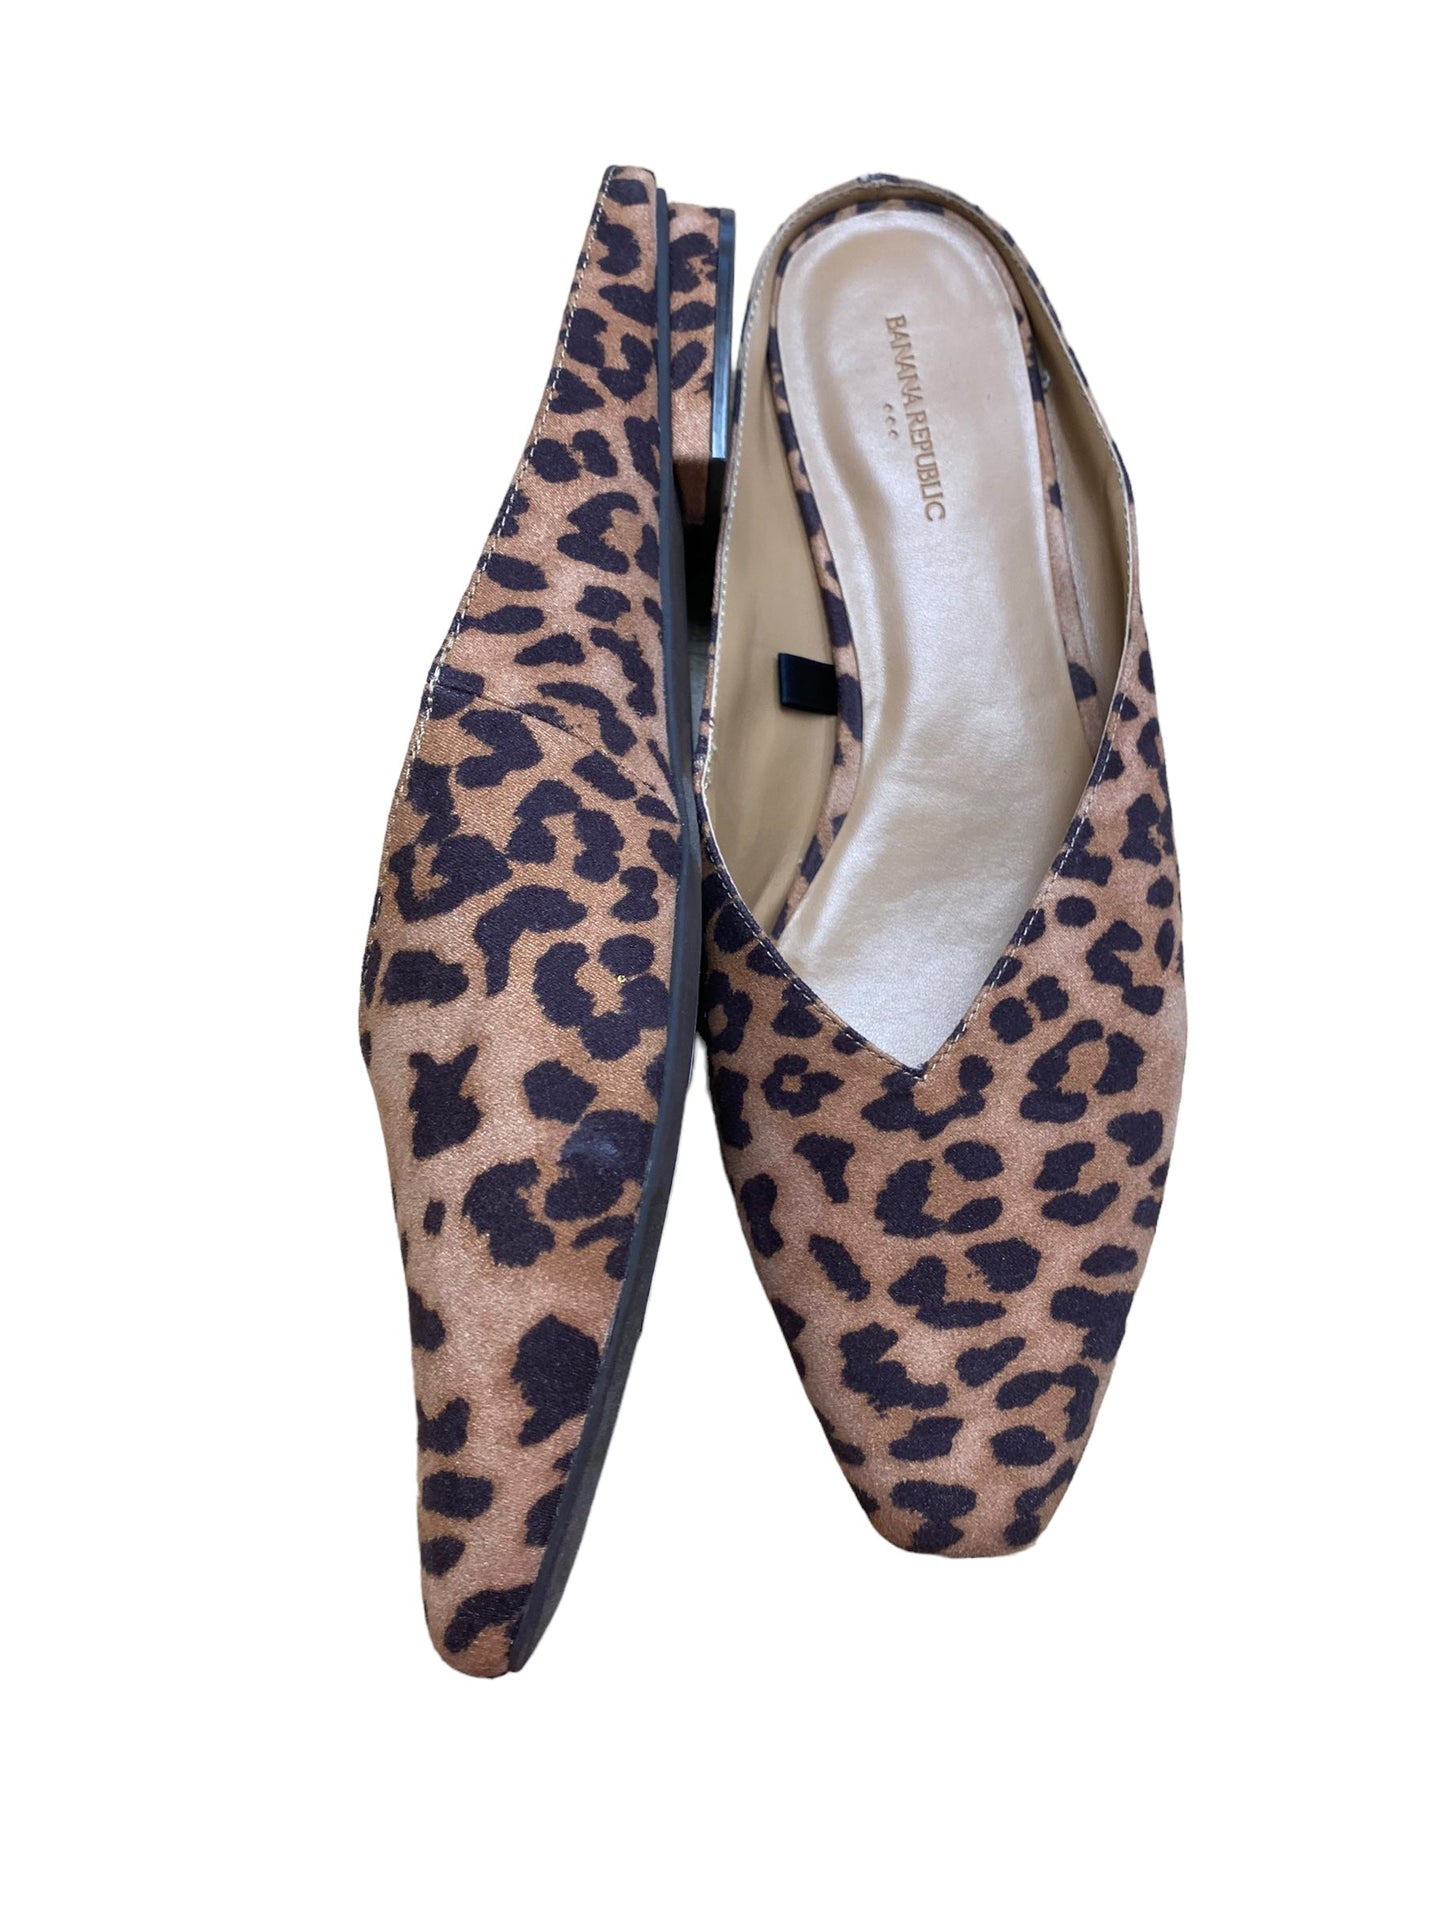 Animal Print Shoes Flats Banana Republic, Size 8.5